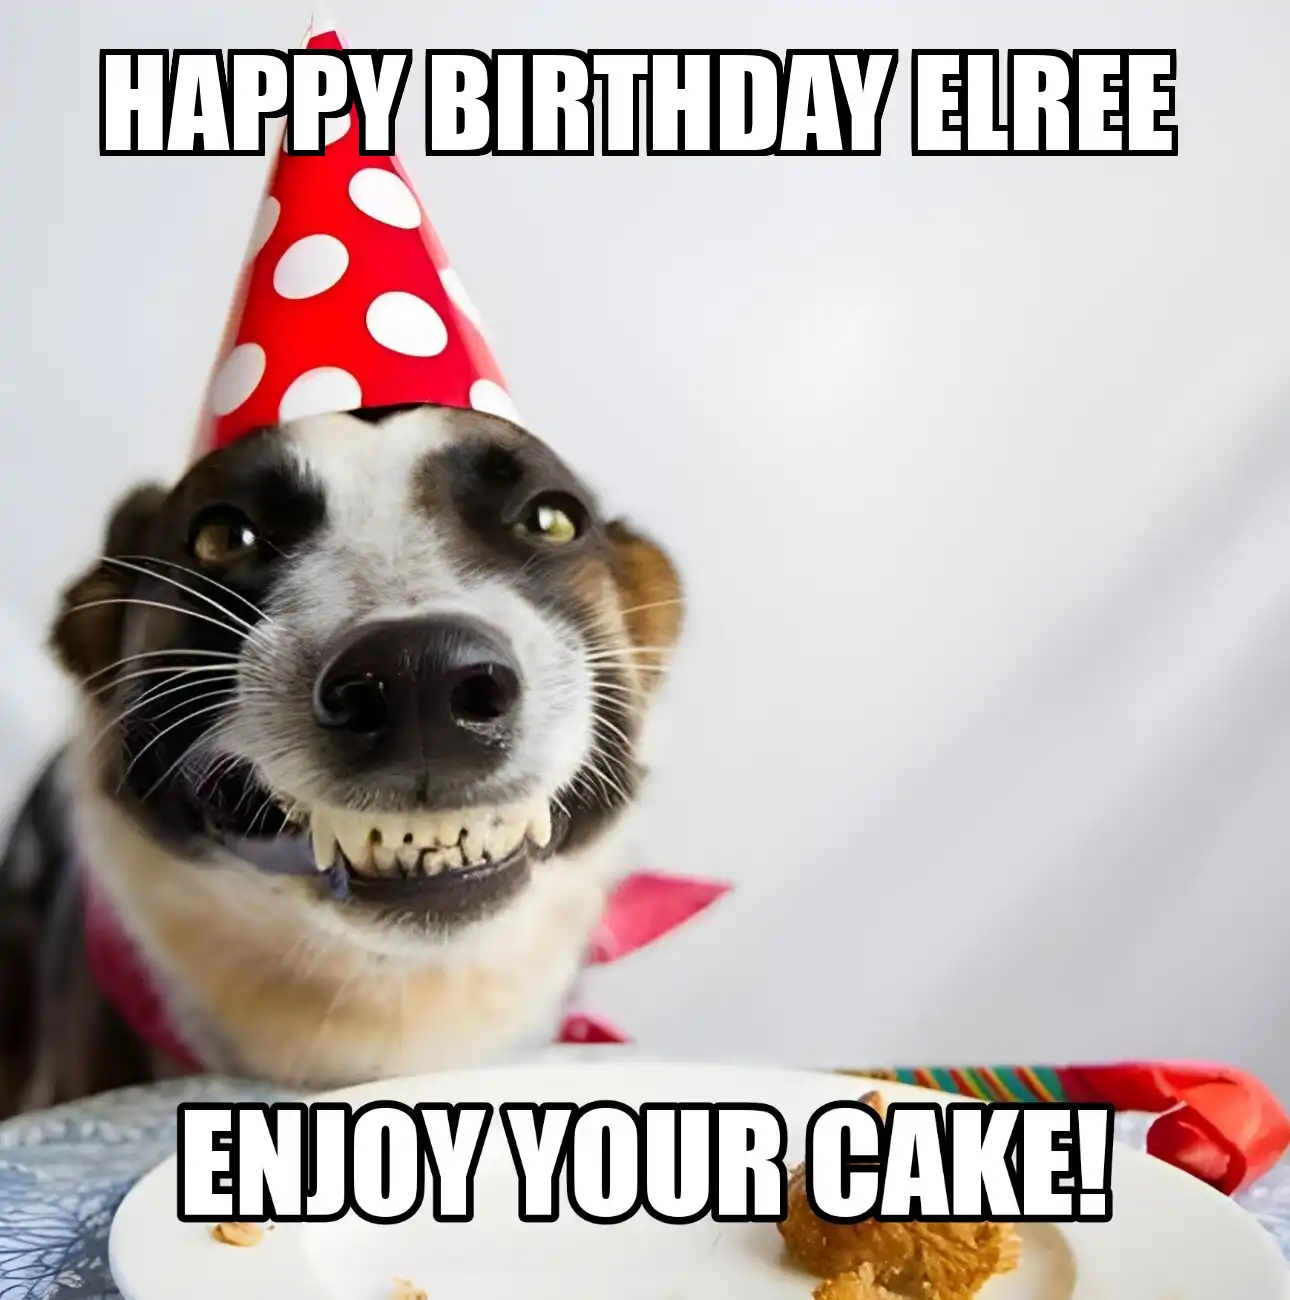 Happy Birthday Elree Enjoy Your Cake Dog Meme